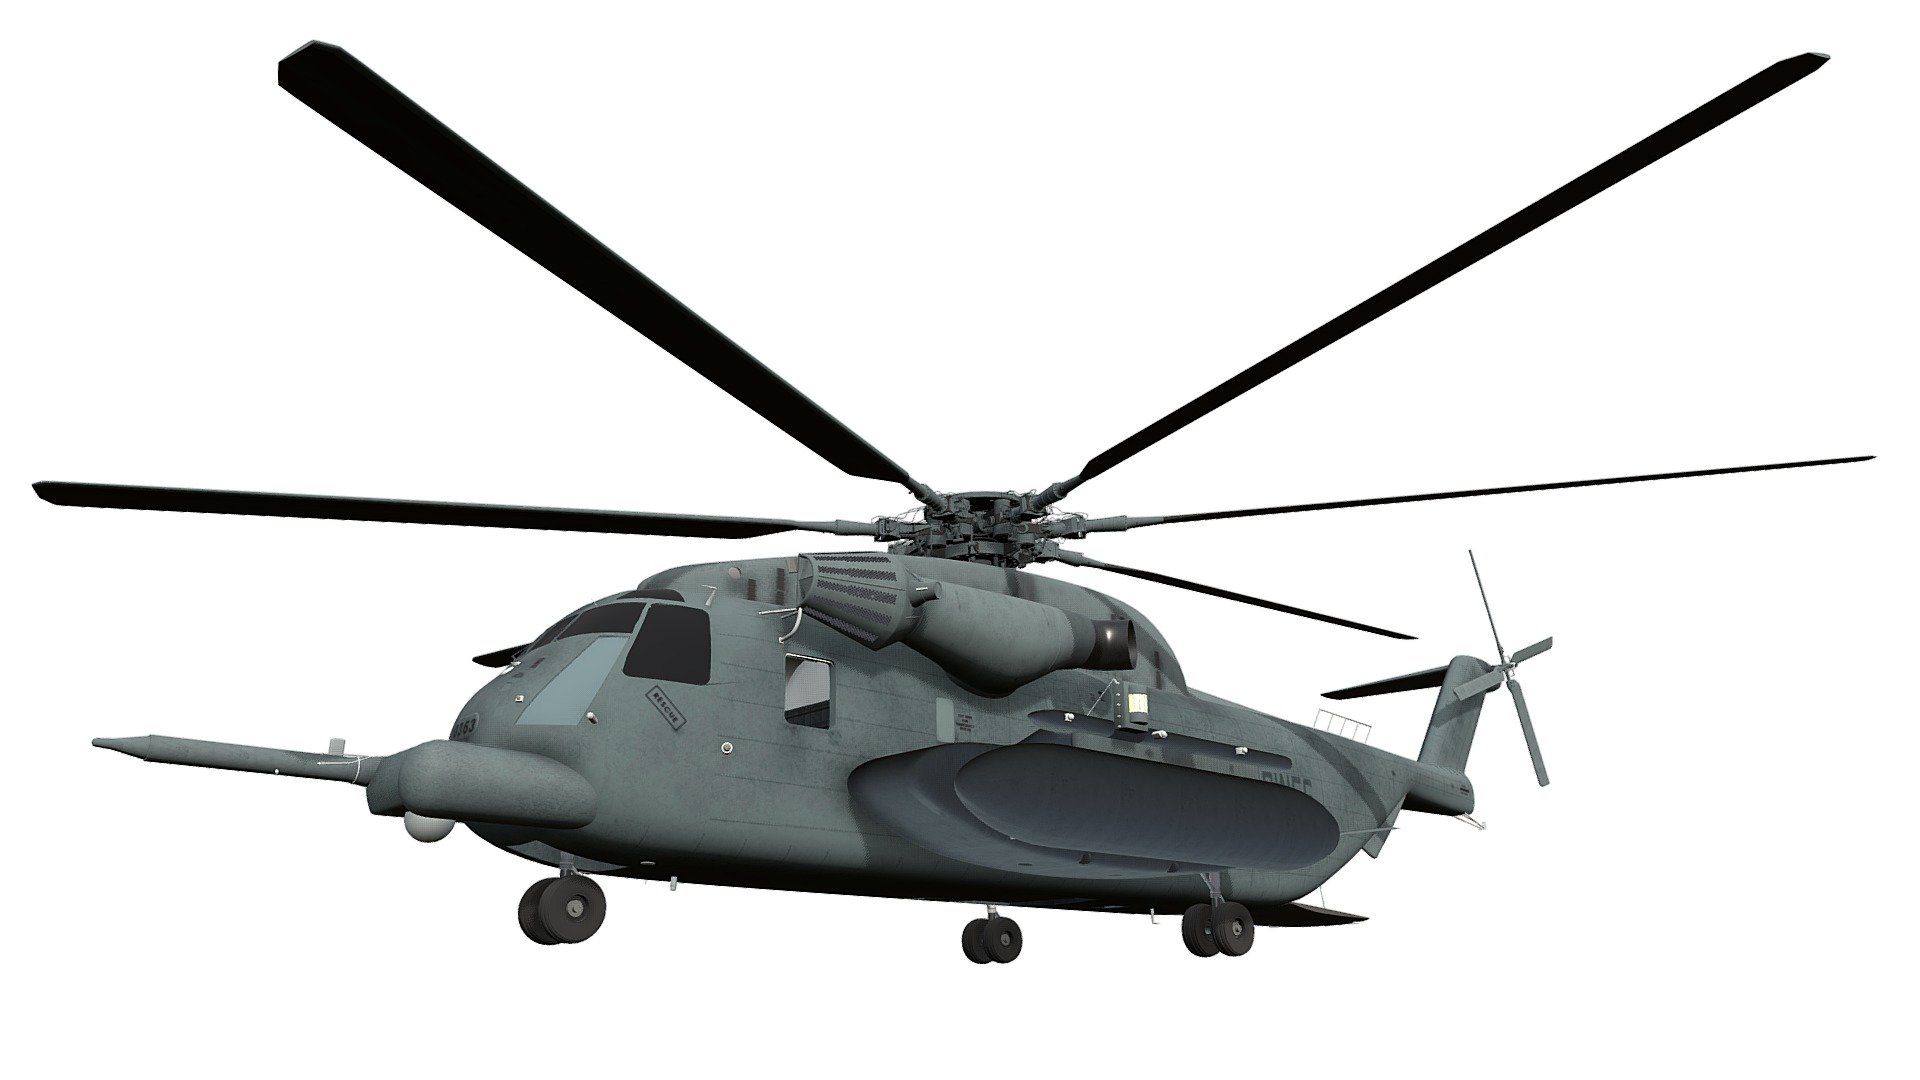 Detailed 3d model of The Sikorsky CH-53E Super Stallion.

Included Formats:

3D Studio

Lightwave

3ds Max

OBJ

Softimage - Sikorsky CH-53E Super Stallion Helicopter - Buy Royalty Free 3D model by 3DHorse 3d model